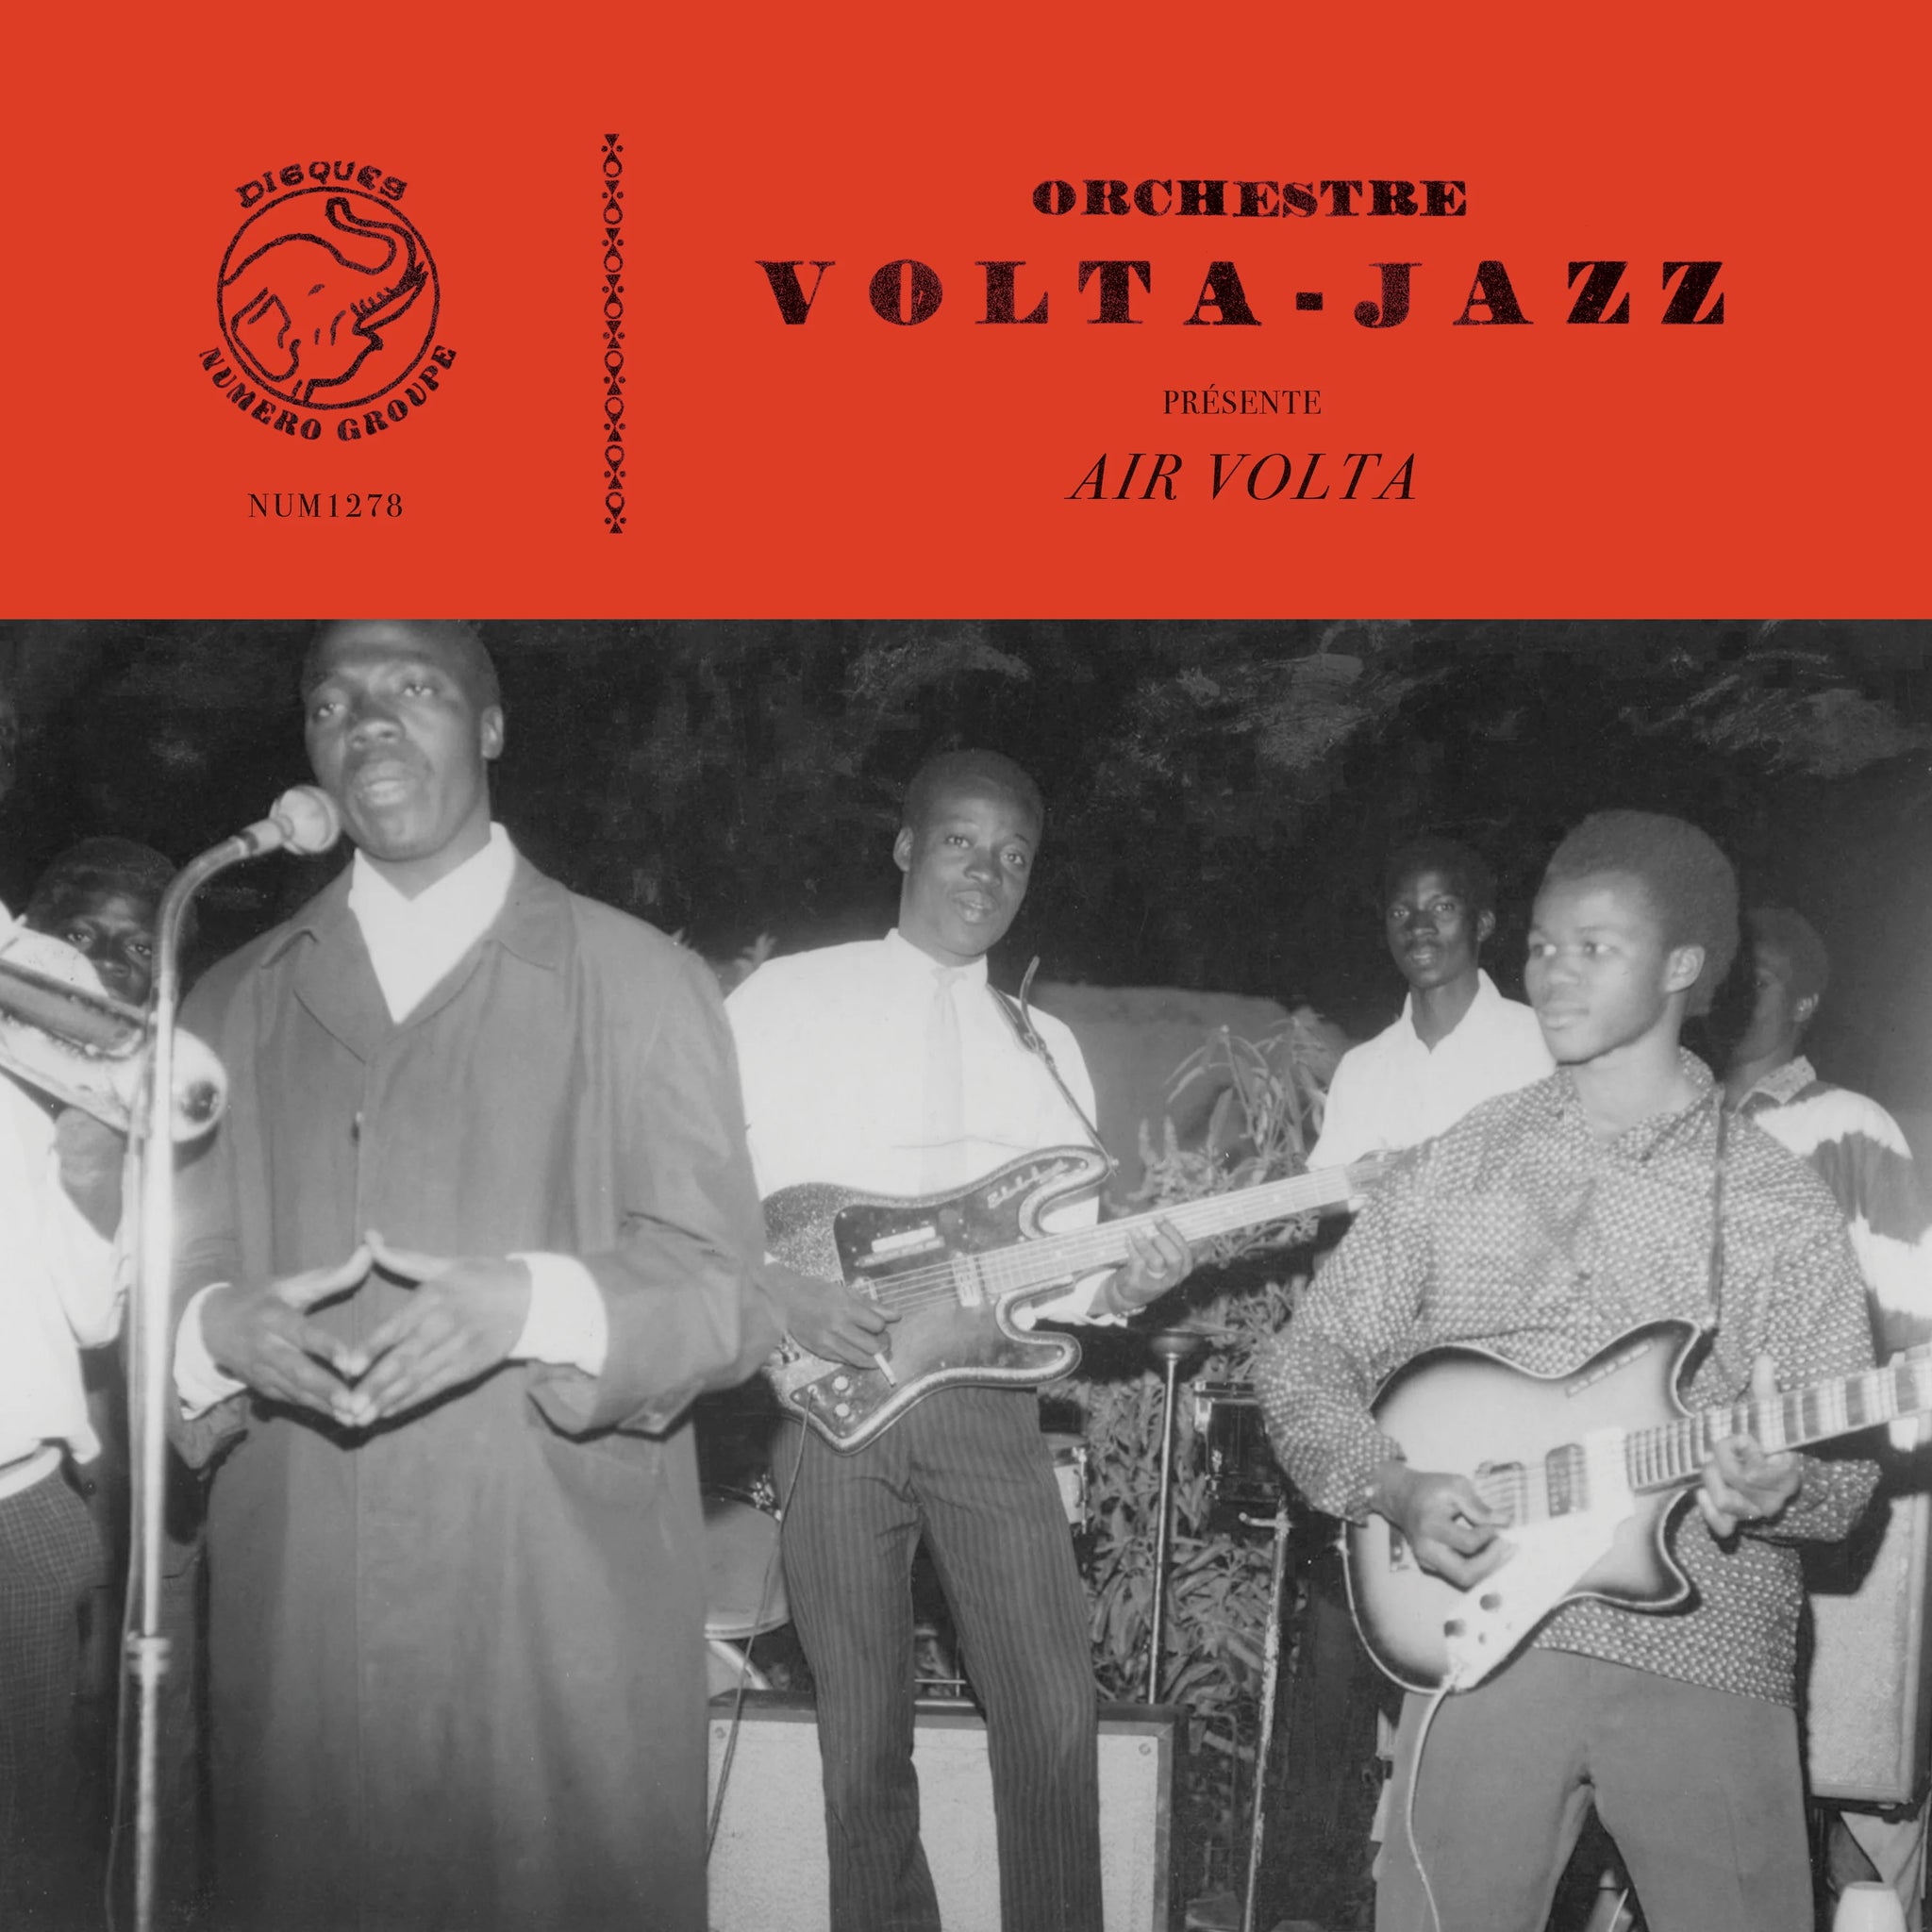 ORCHESTRE VOLTA-JAZZ - AIR VOLTA Vinyl LP